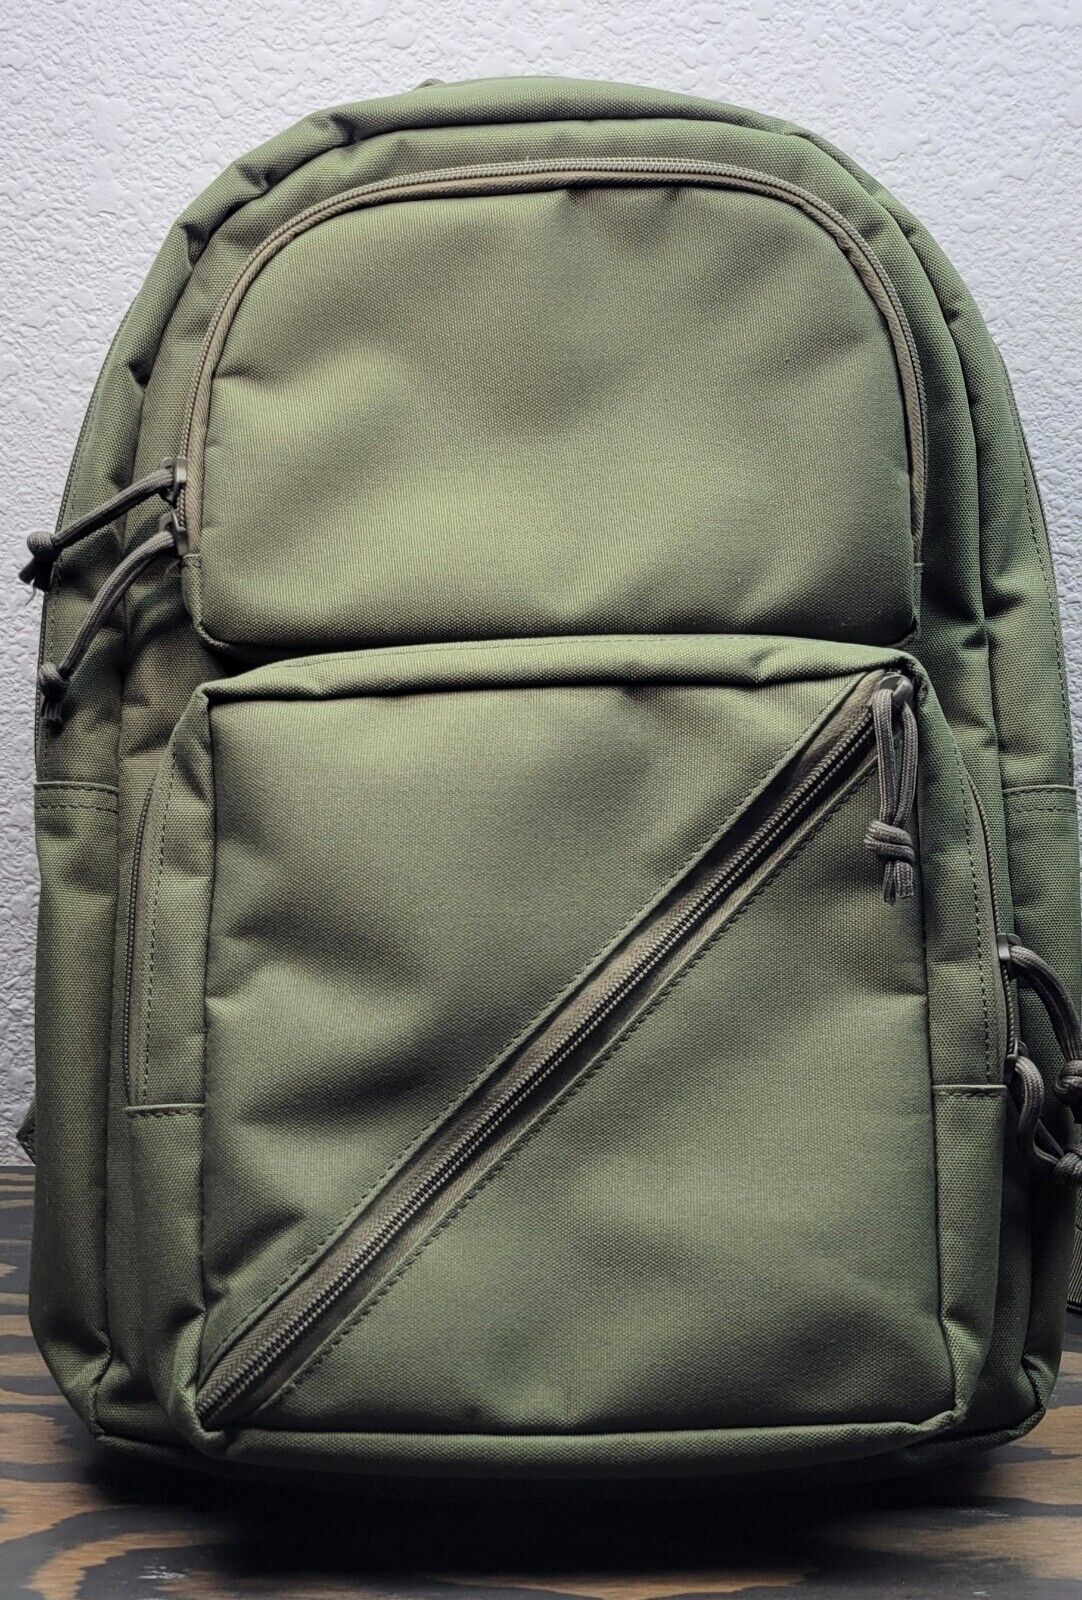 Voodoo Tactical Slim Line Backpack OD Green 15-0143